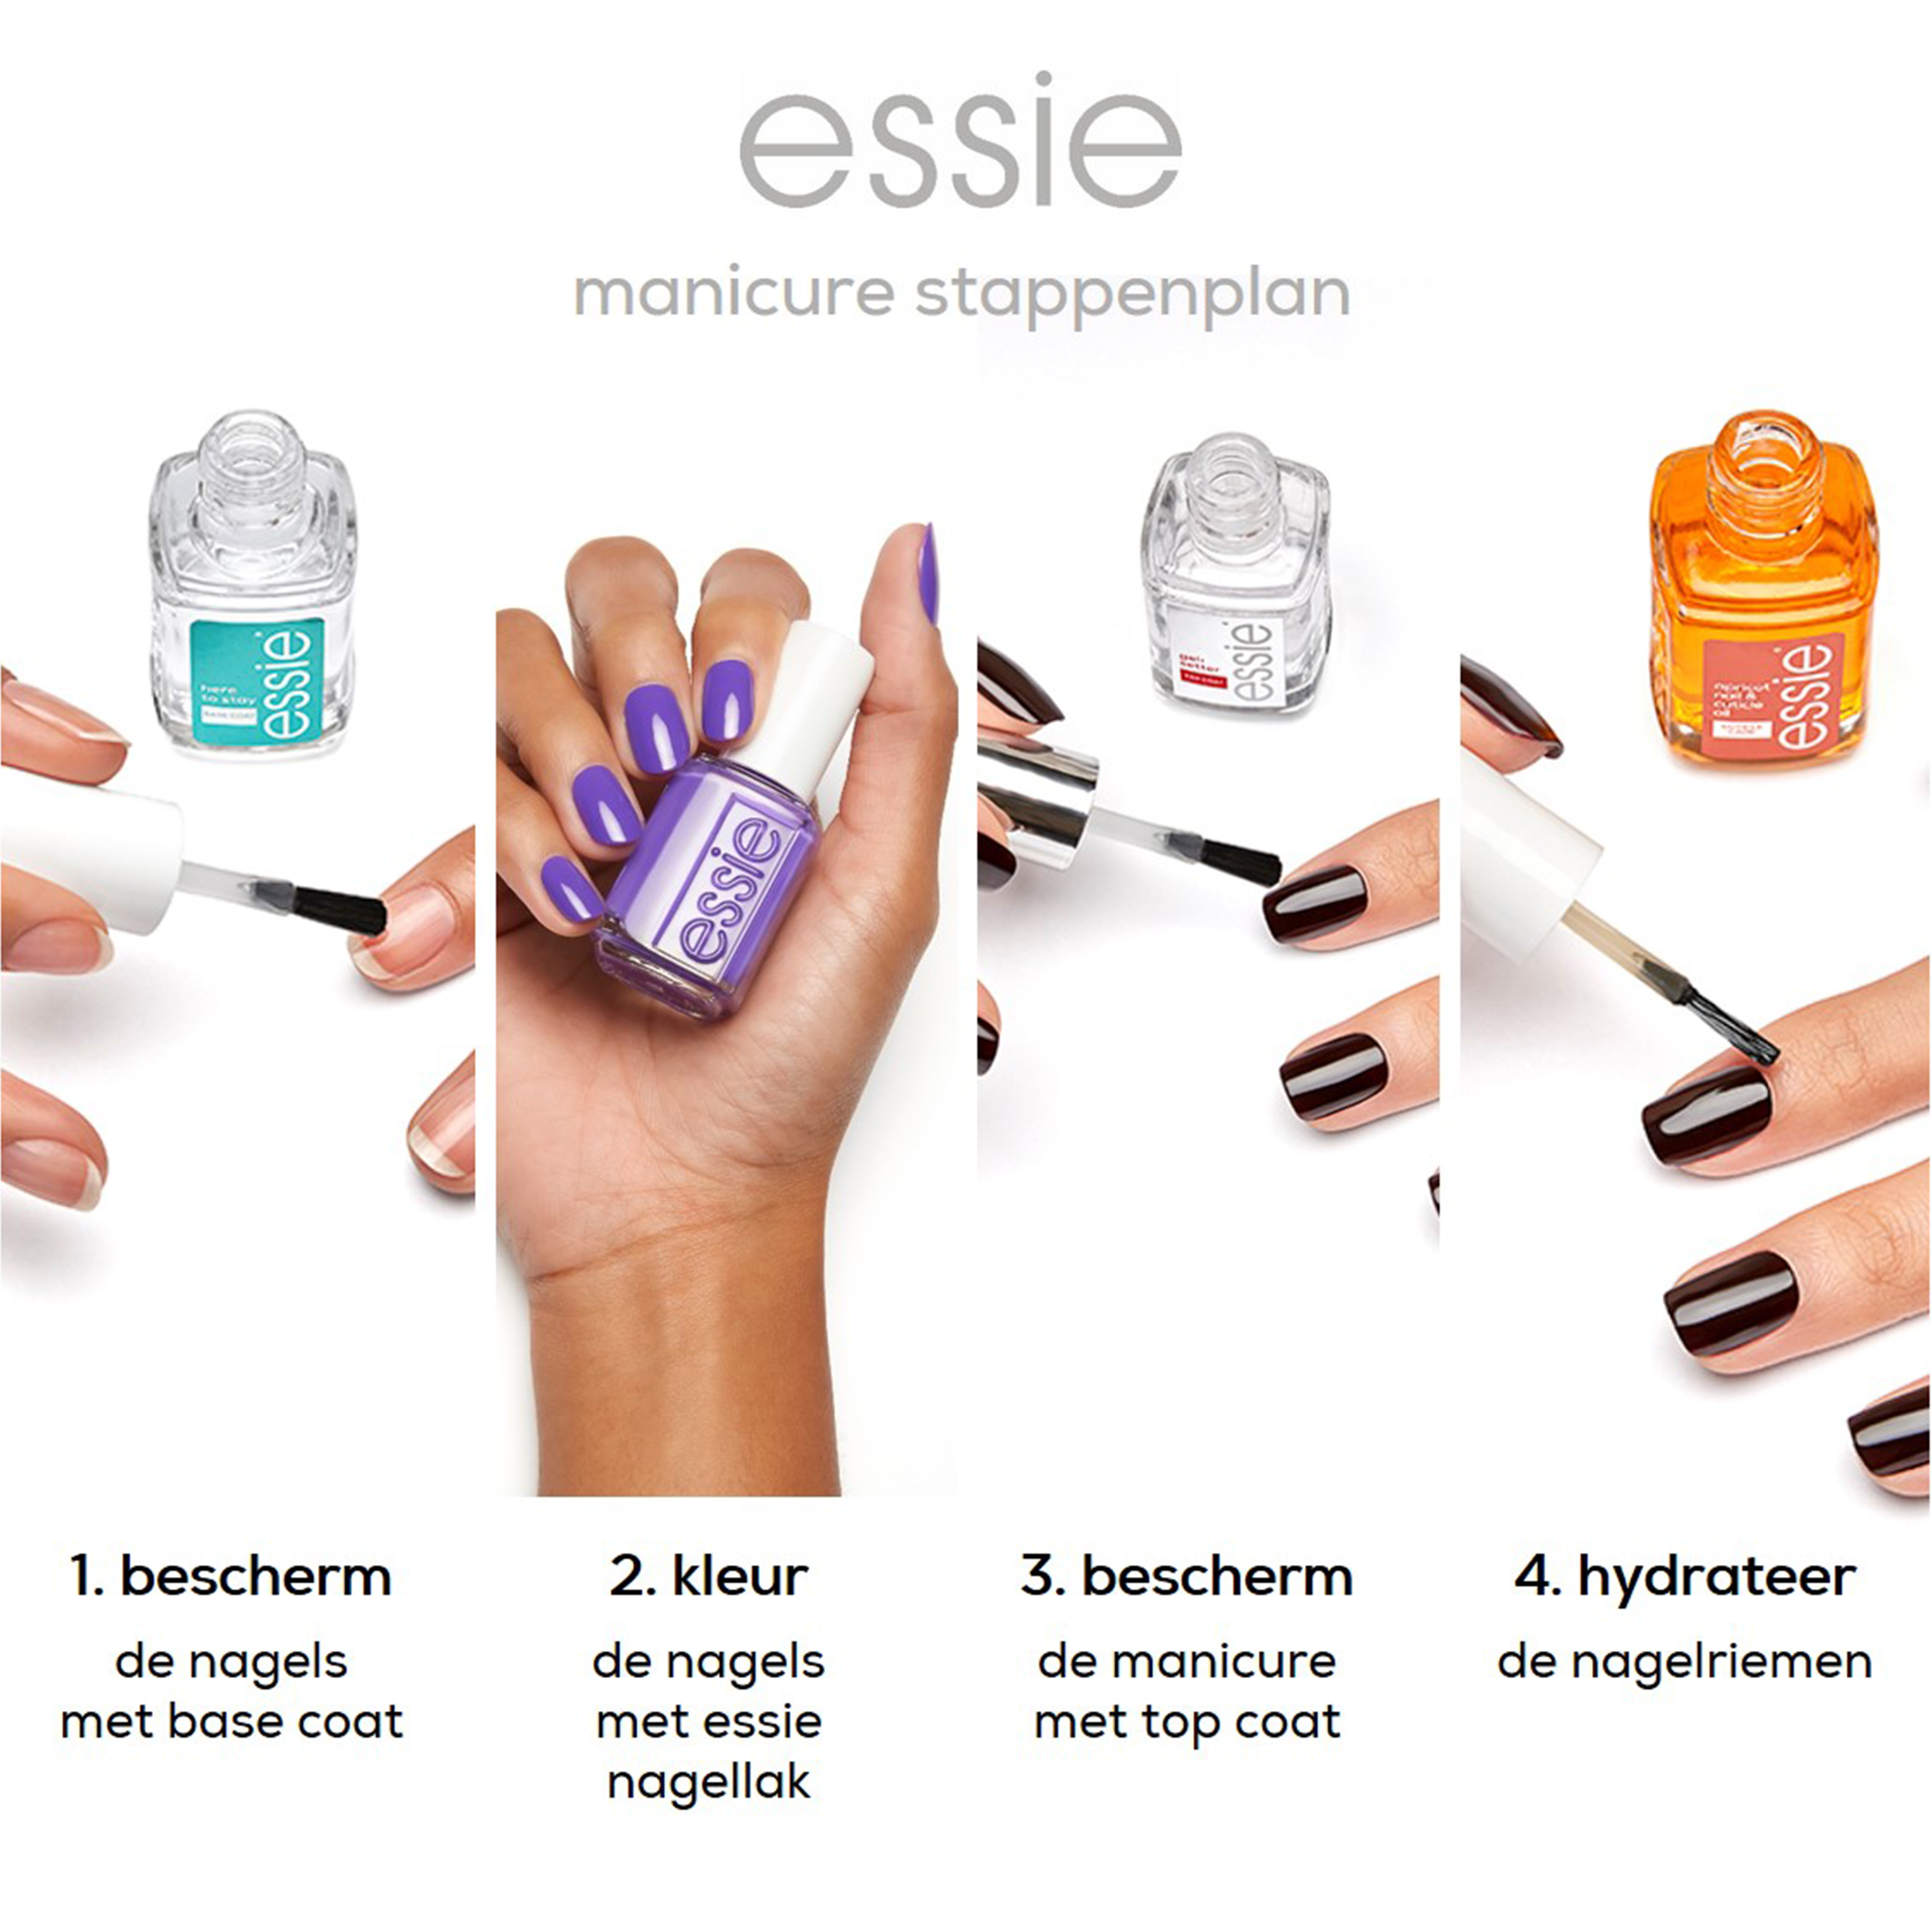 Essie fall 2020 limited edition - 730 cargo cameo - bruin - glitter nagellak - 13,5 ml